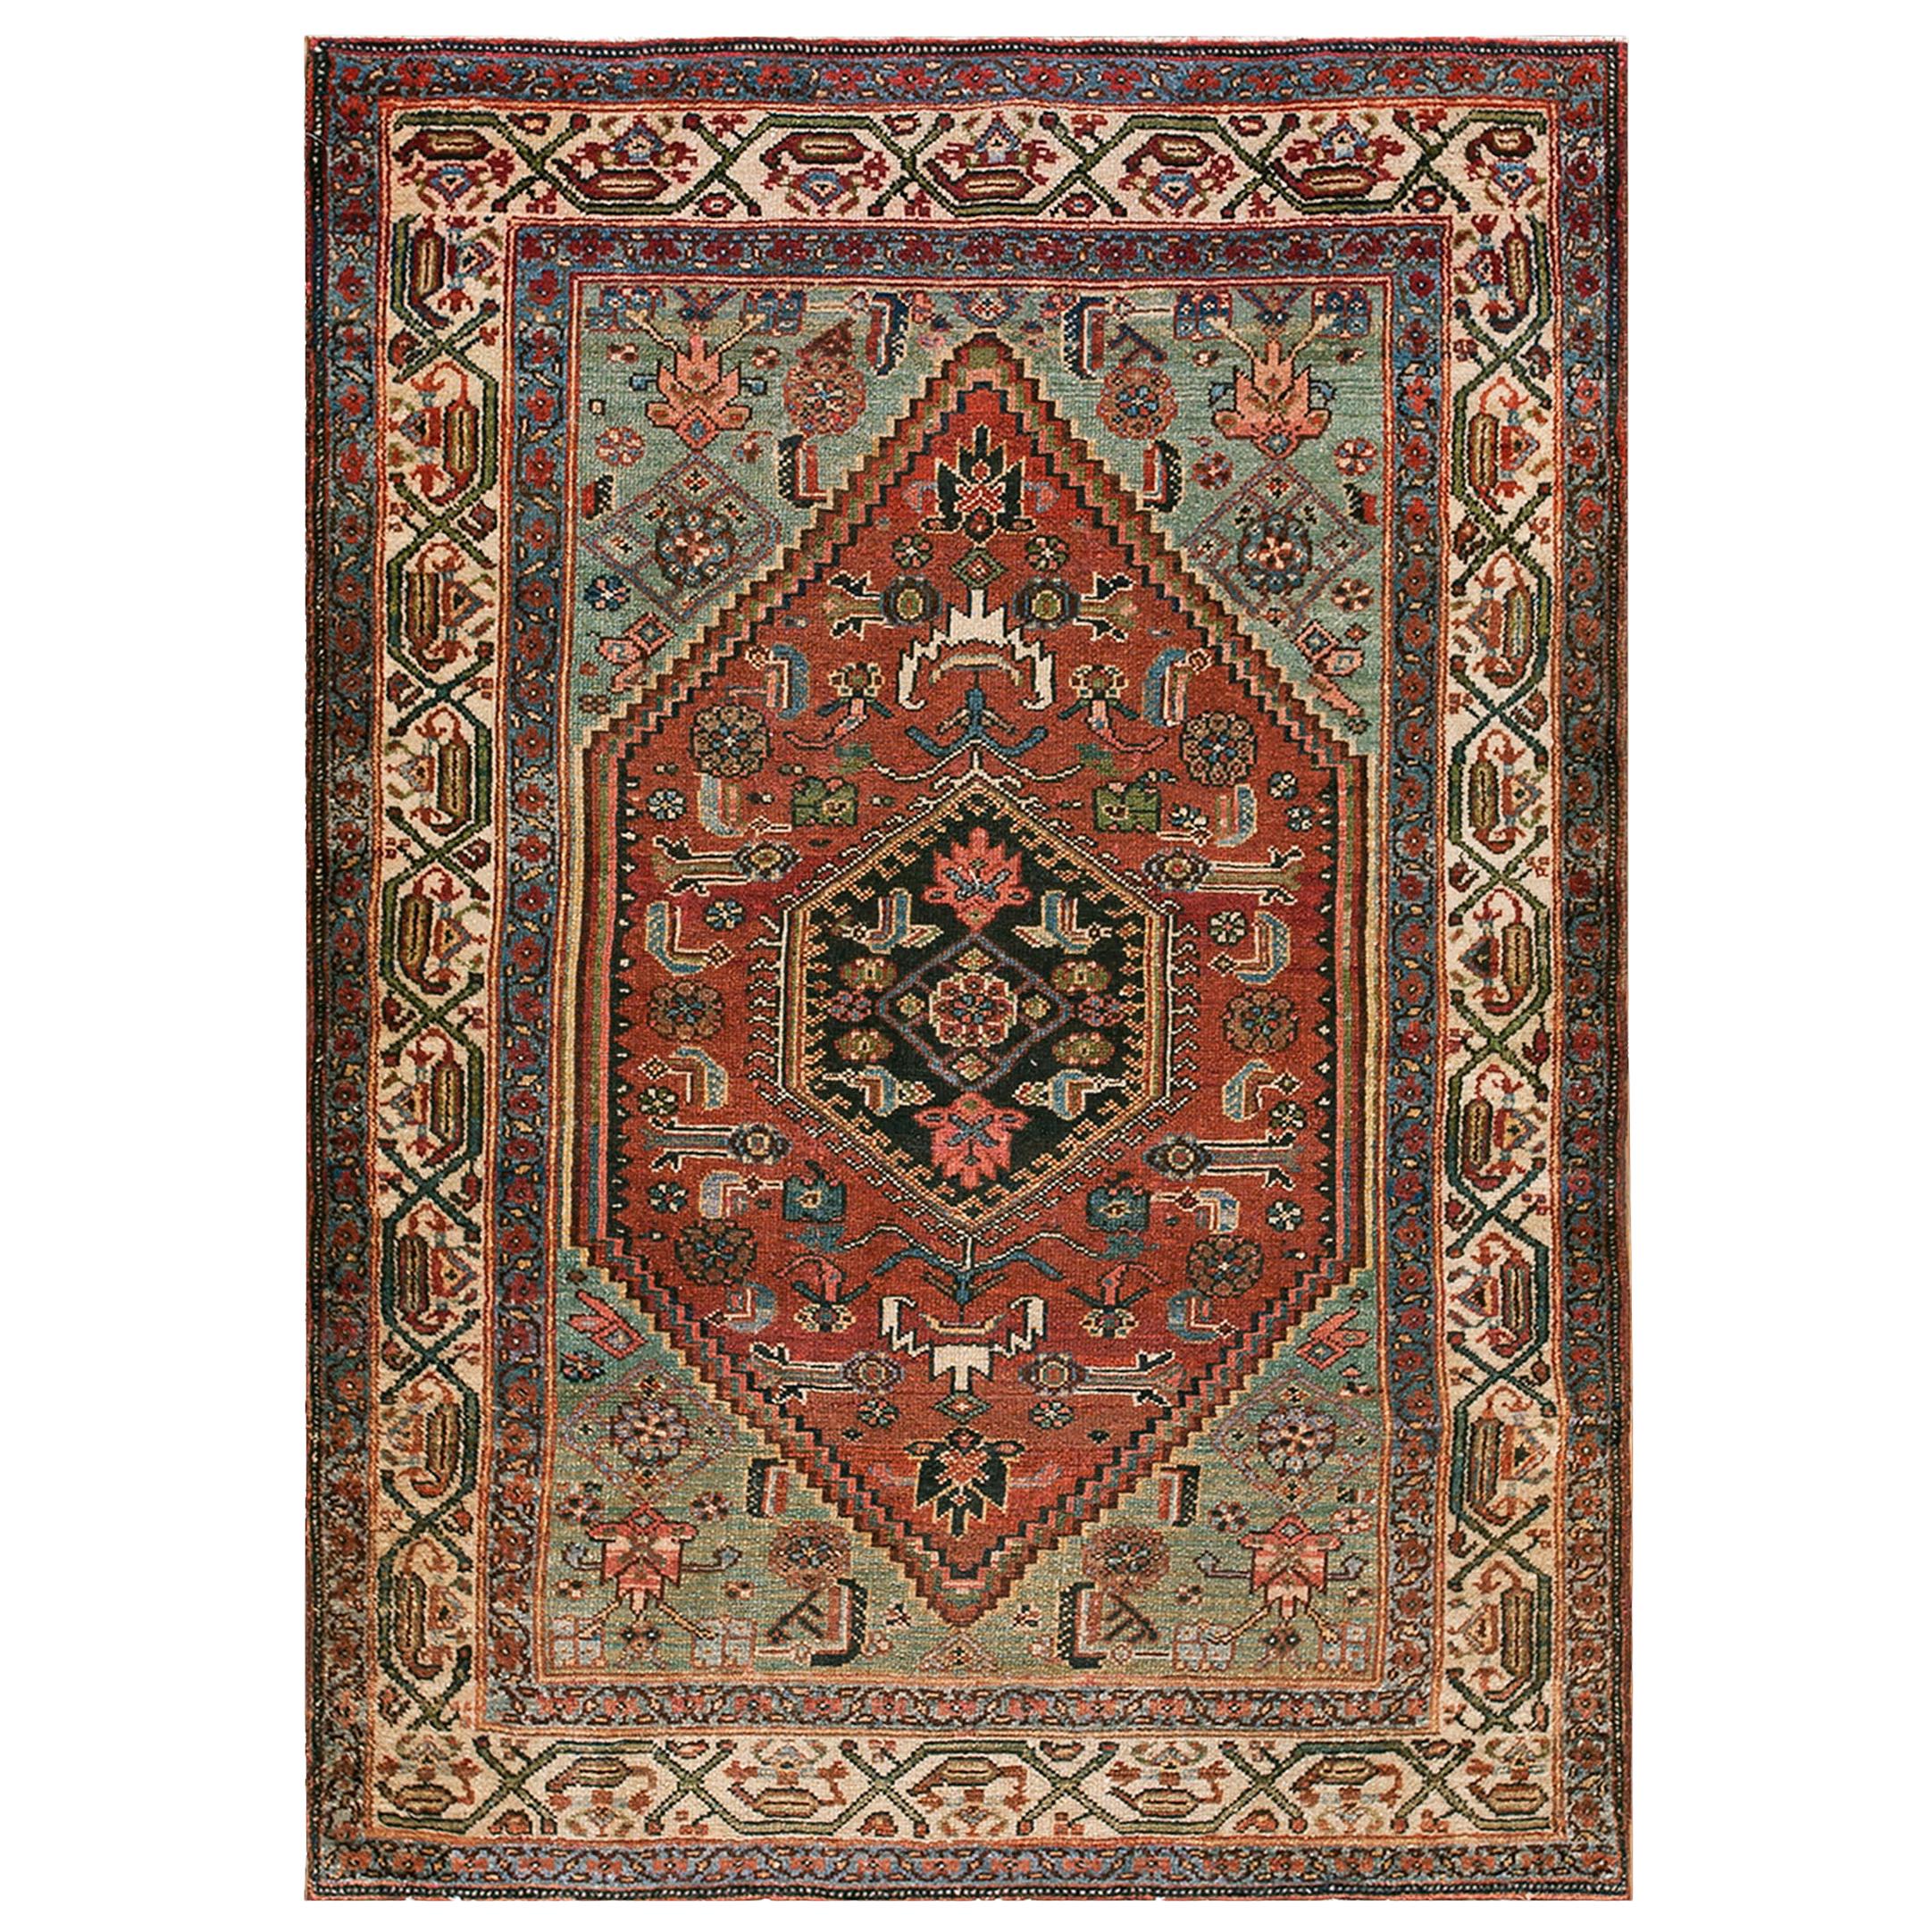 Early 20th Century Persian Malayer Carpet ( 3'4" x 4'10" - 102 x 147 )